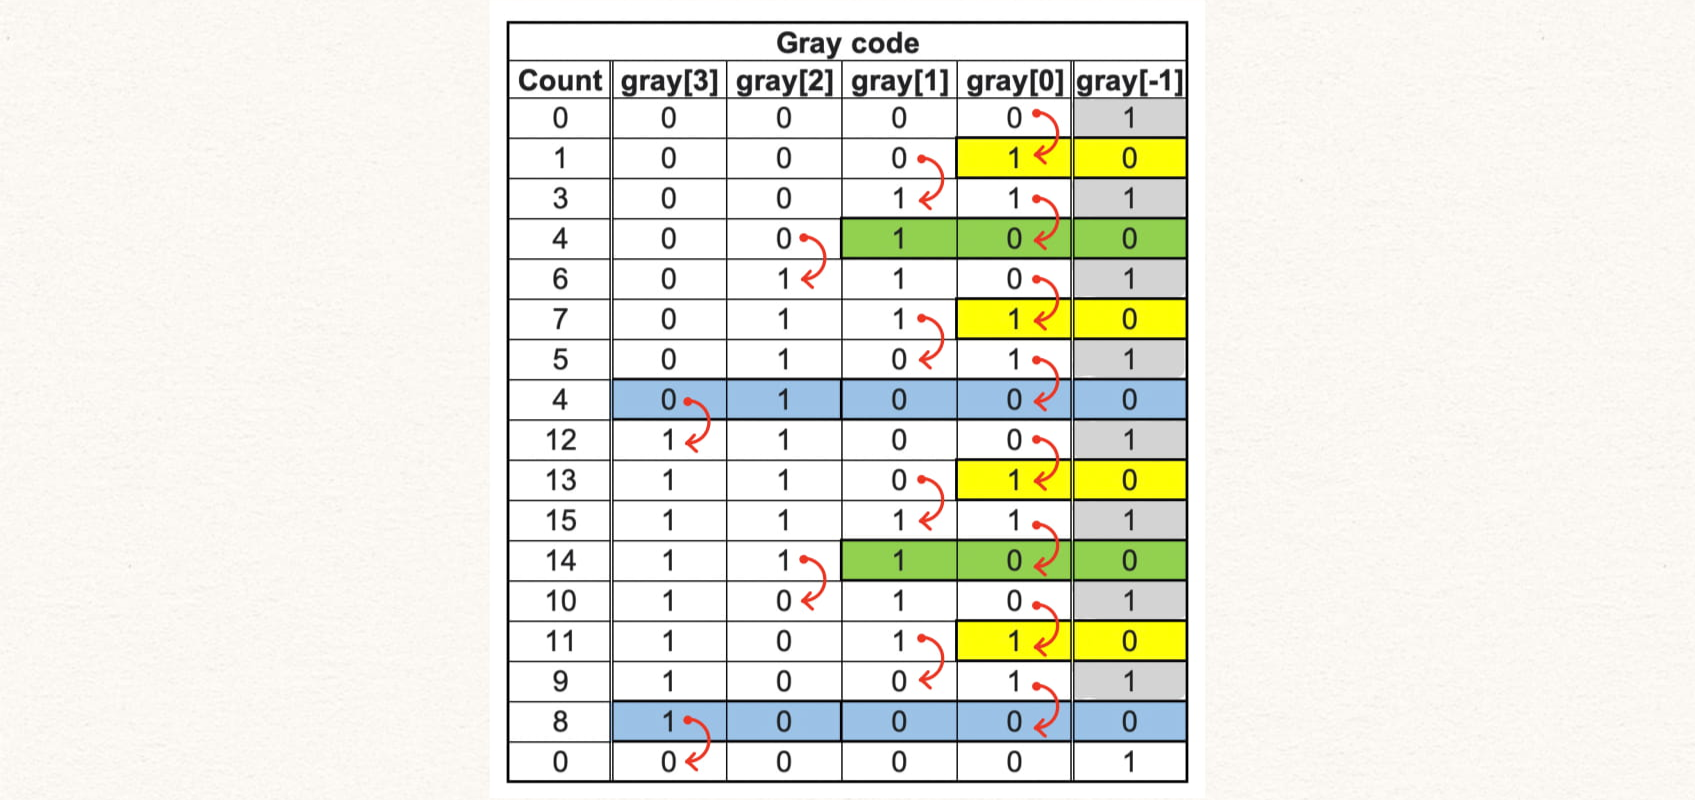 gray_code_table